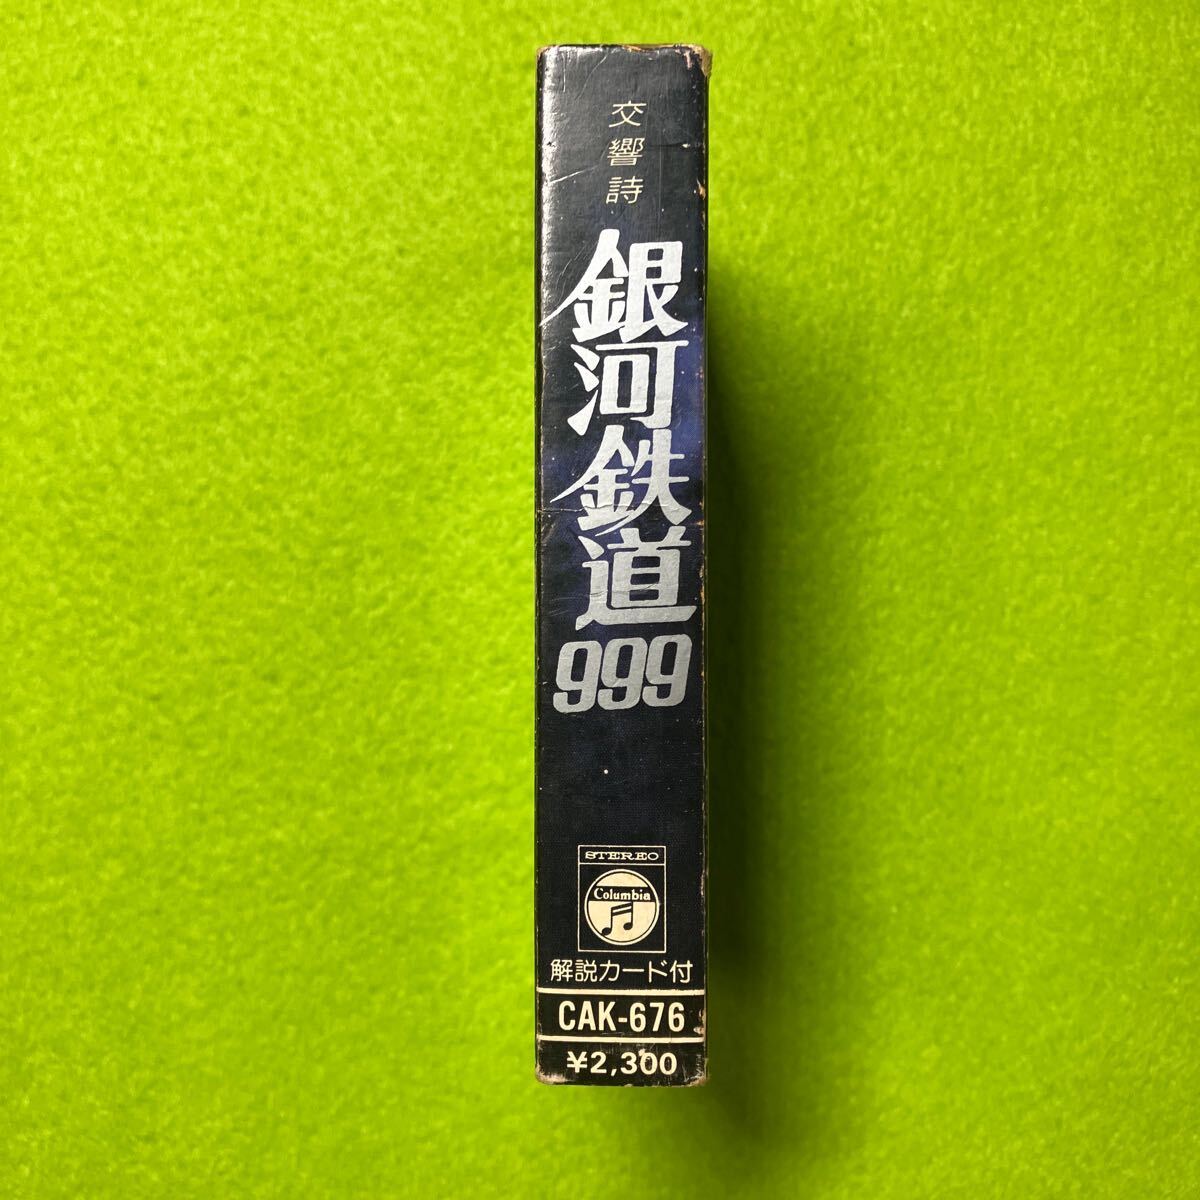 [ cassette tape ] reverberation poetry Ginga Tetsudou 999 / lyric sheet lack of /CAK-676 / Matsumoto 0 ./s Lee na in / operation not yet verification retro 